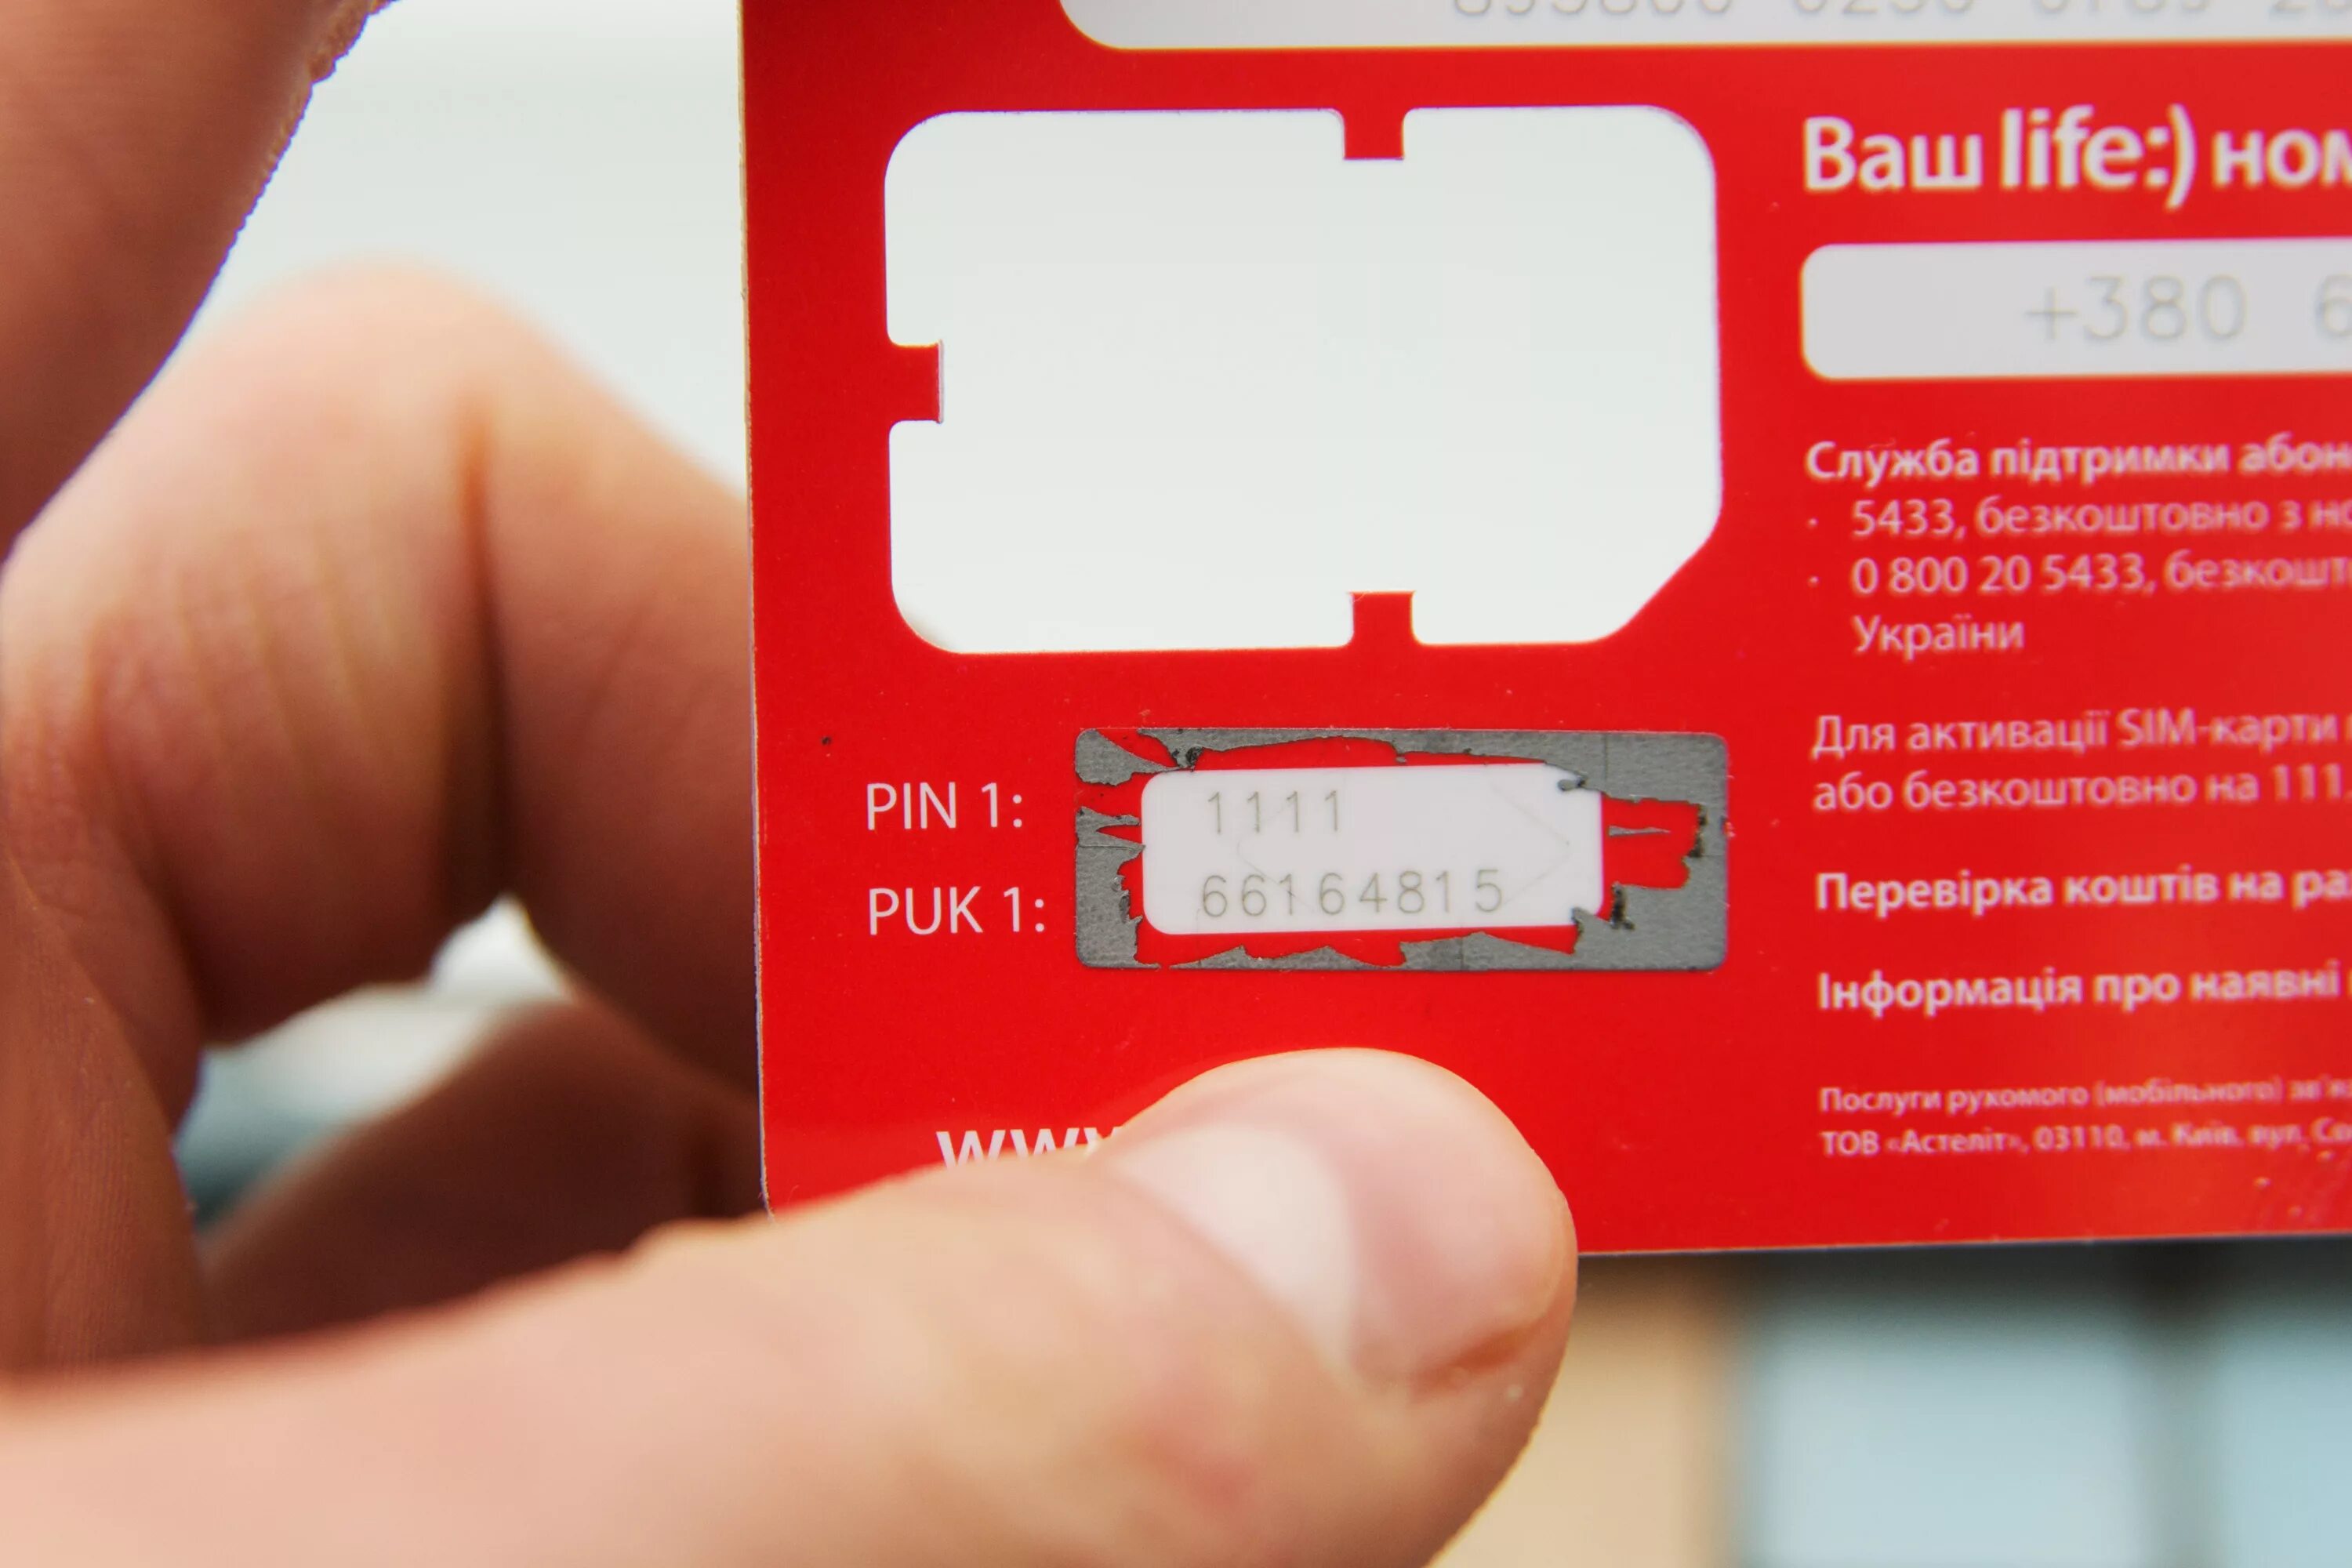 Pin Puk SIM-карта. Пин код сим МТС по умолчанию. Puk код. Puk на сим карте. Пин код состоит из